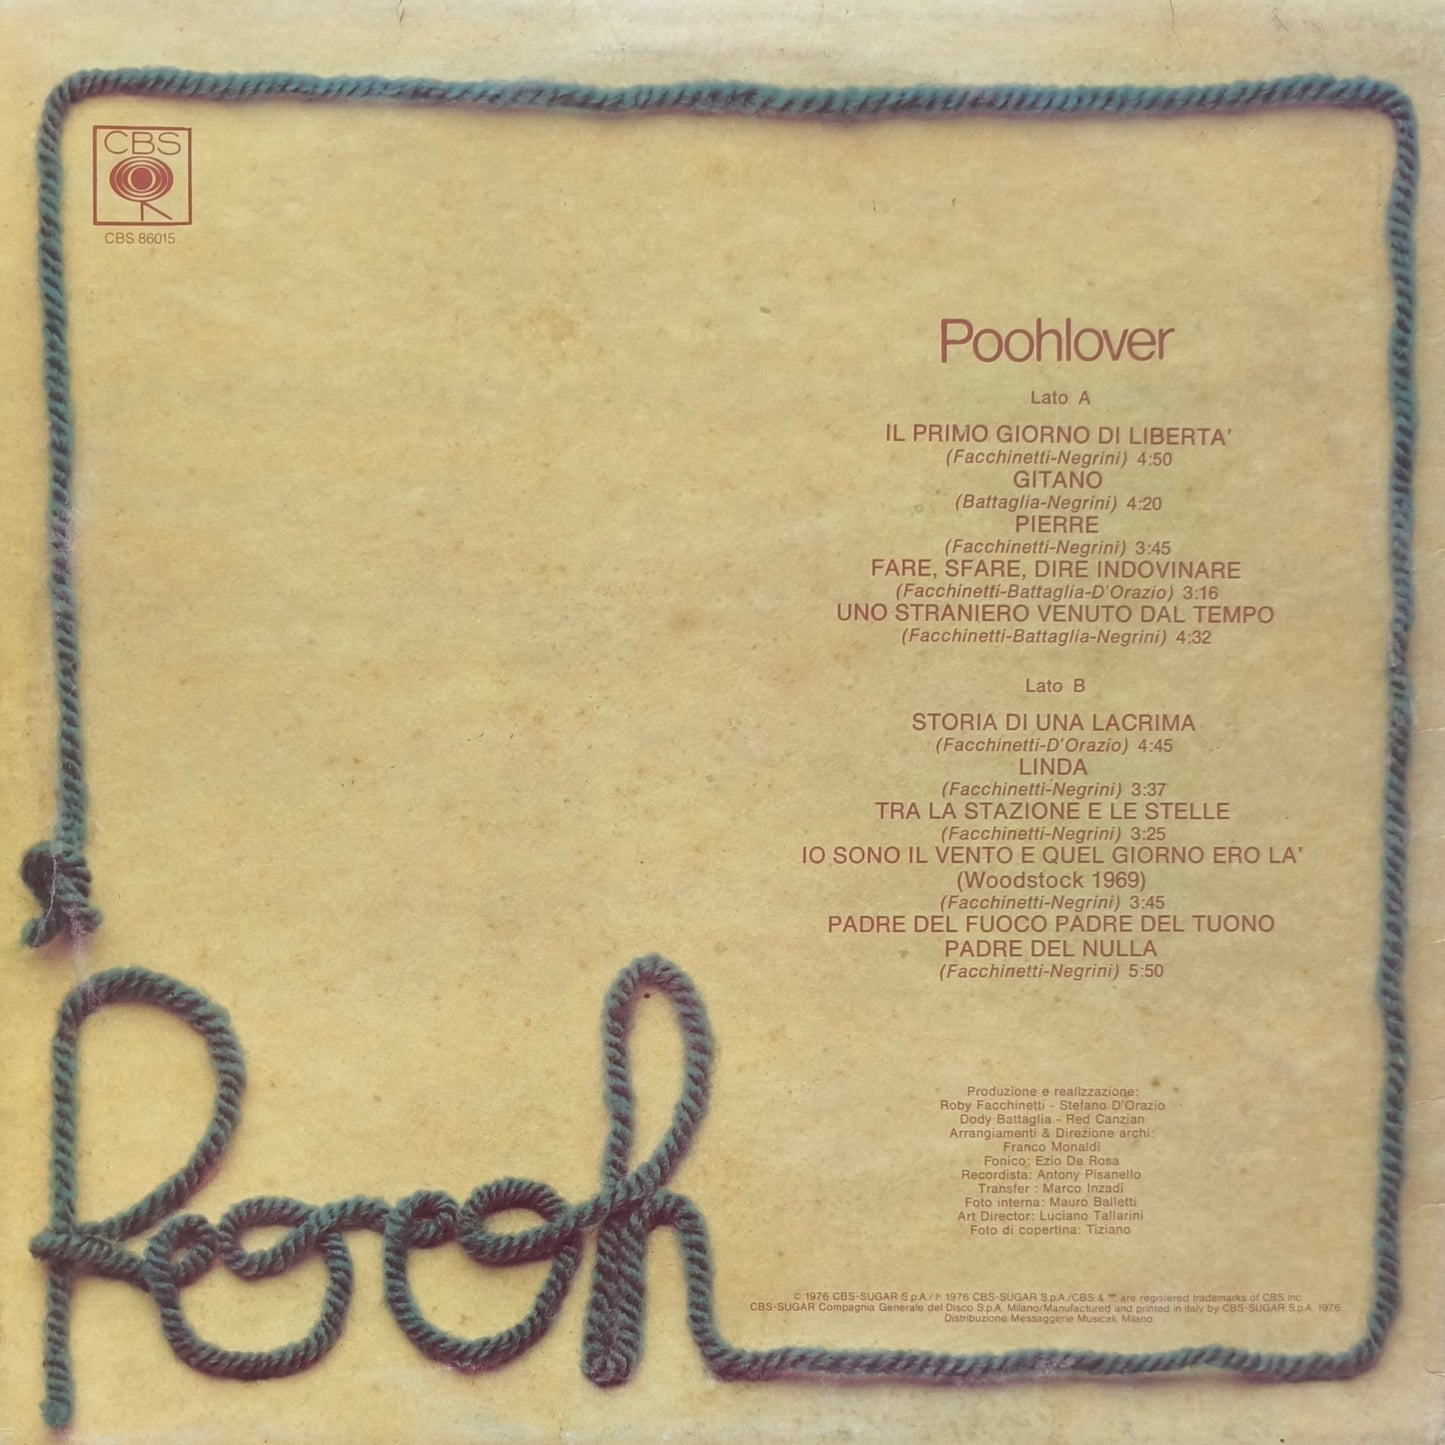 POOH - Poohlover